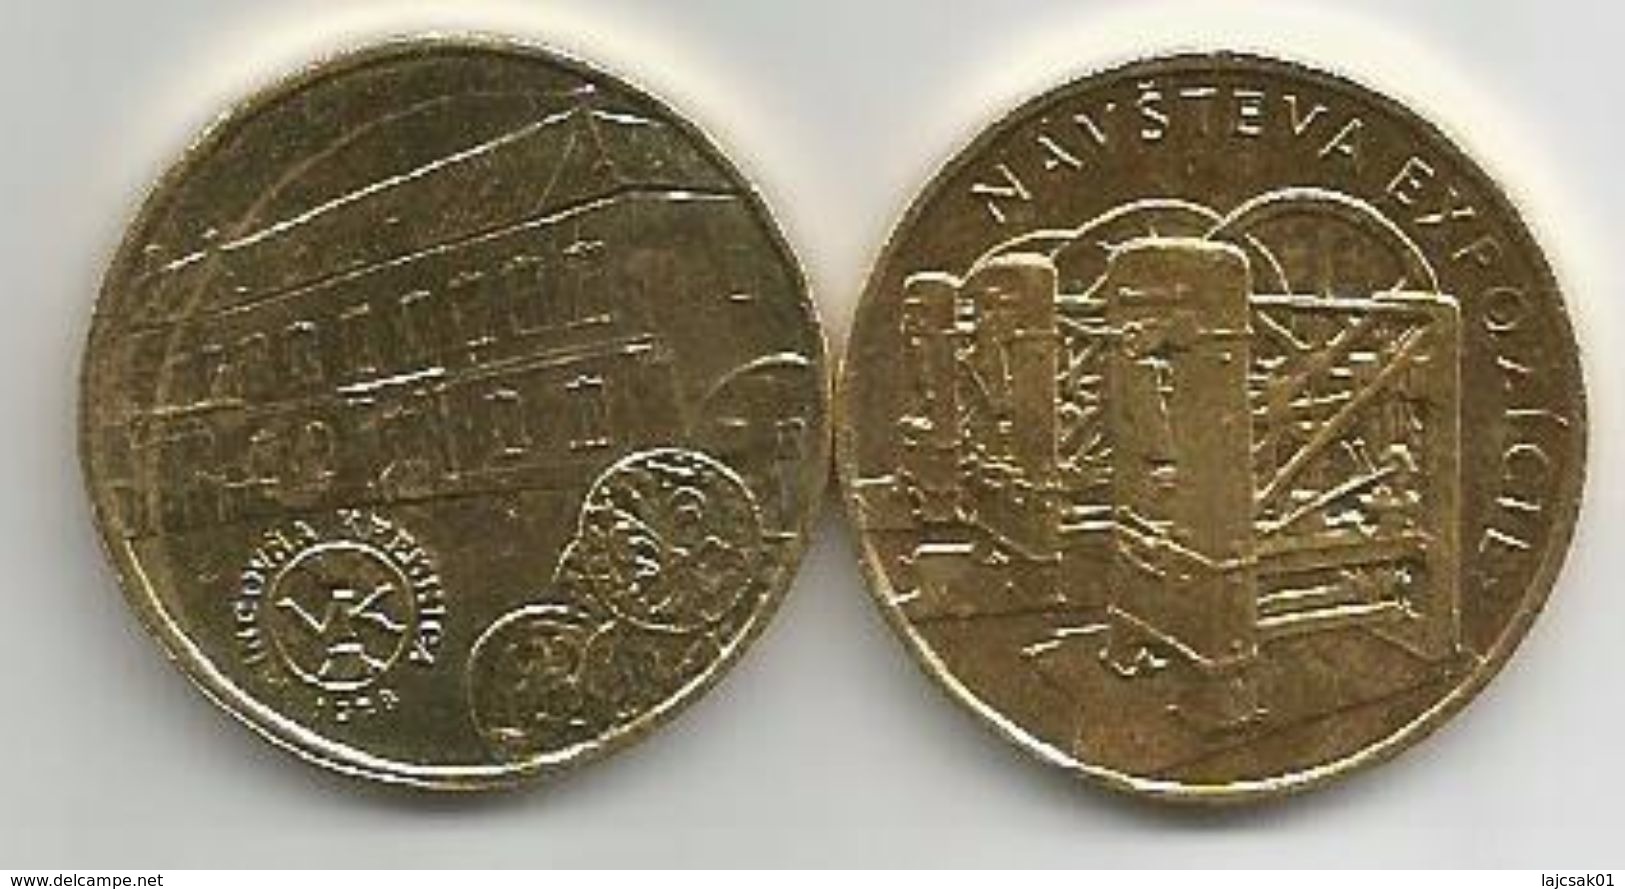 Slovakia Kremnica Mint Token - Slovakia